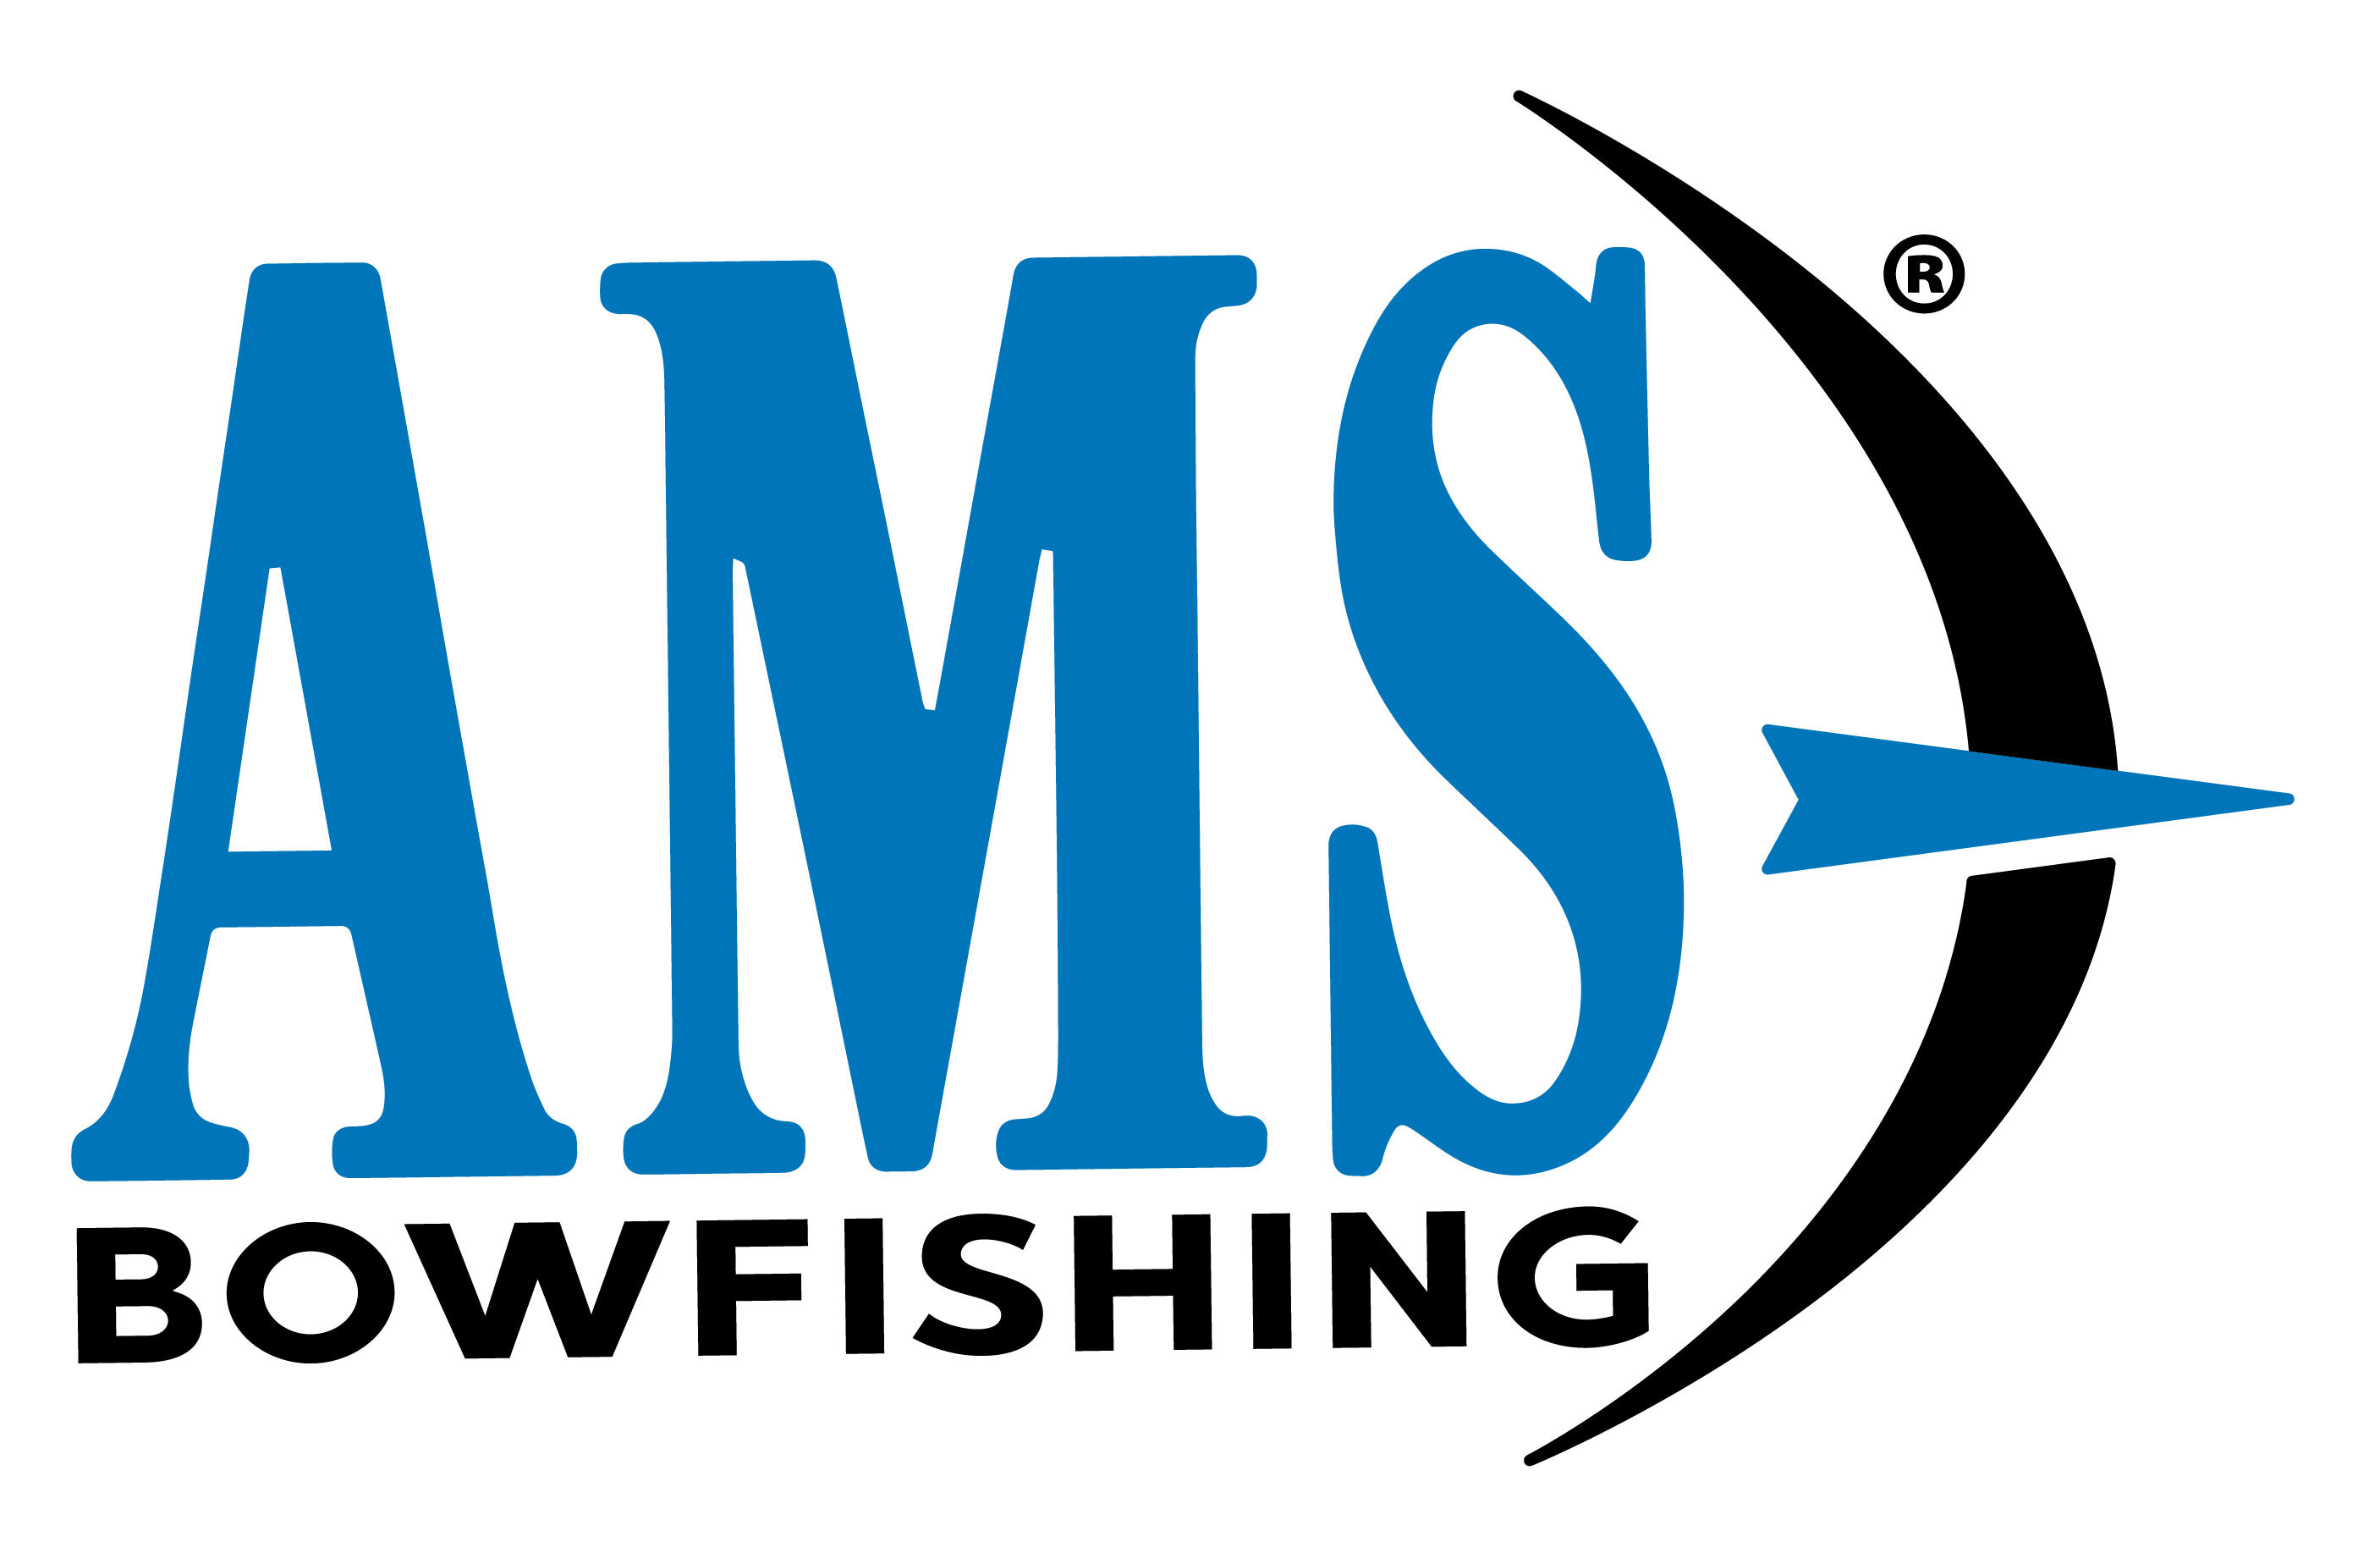 AMS Bowfishing - The #1 brand in bowfishing!